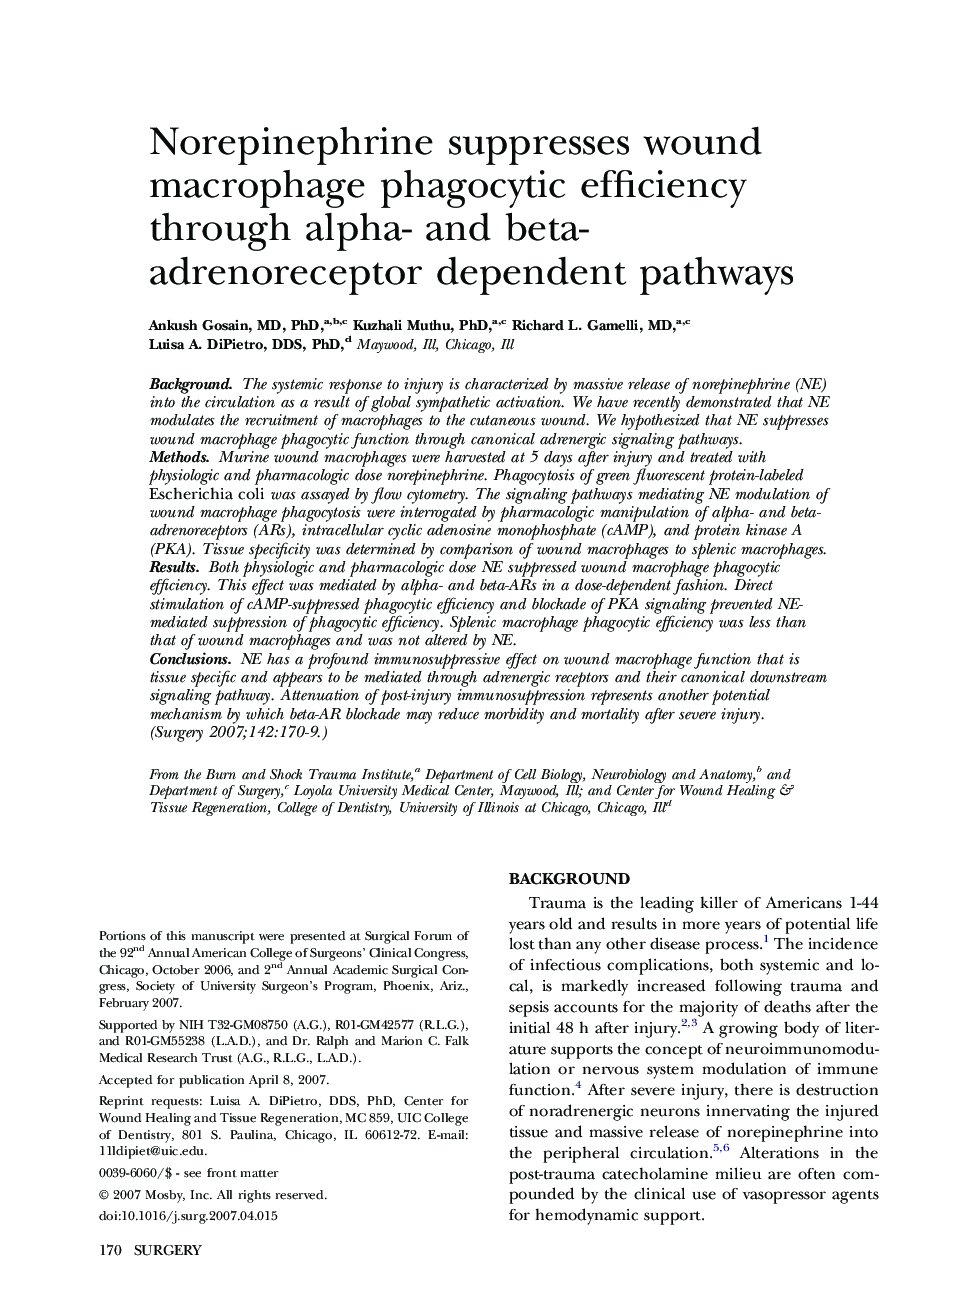 Norepinephrine suppresses wound macrophage phagocytic efficiency through alpha- and beta-adrenoreceptor dependent pathways 